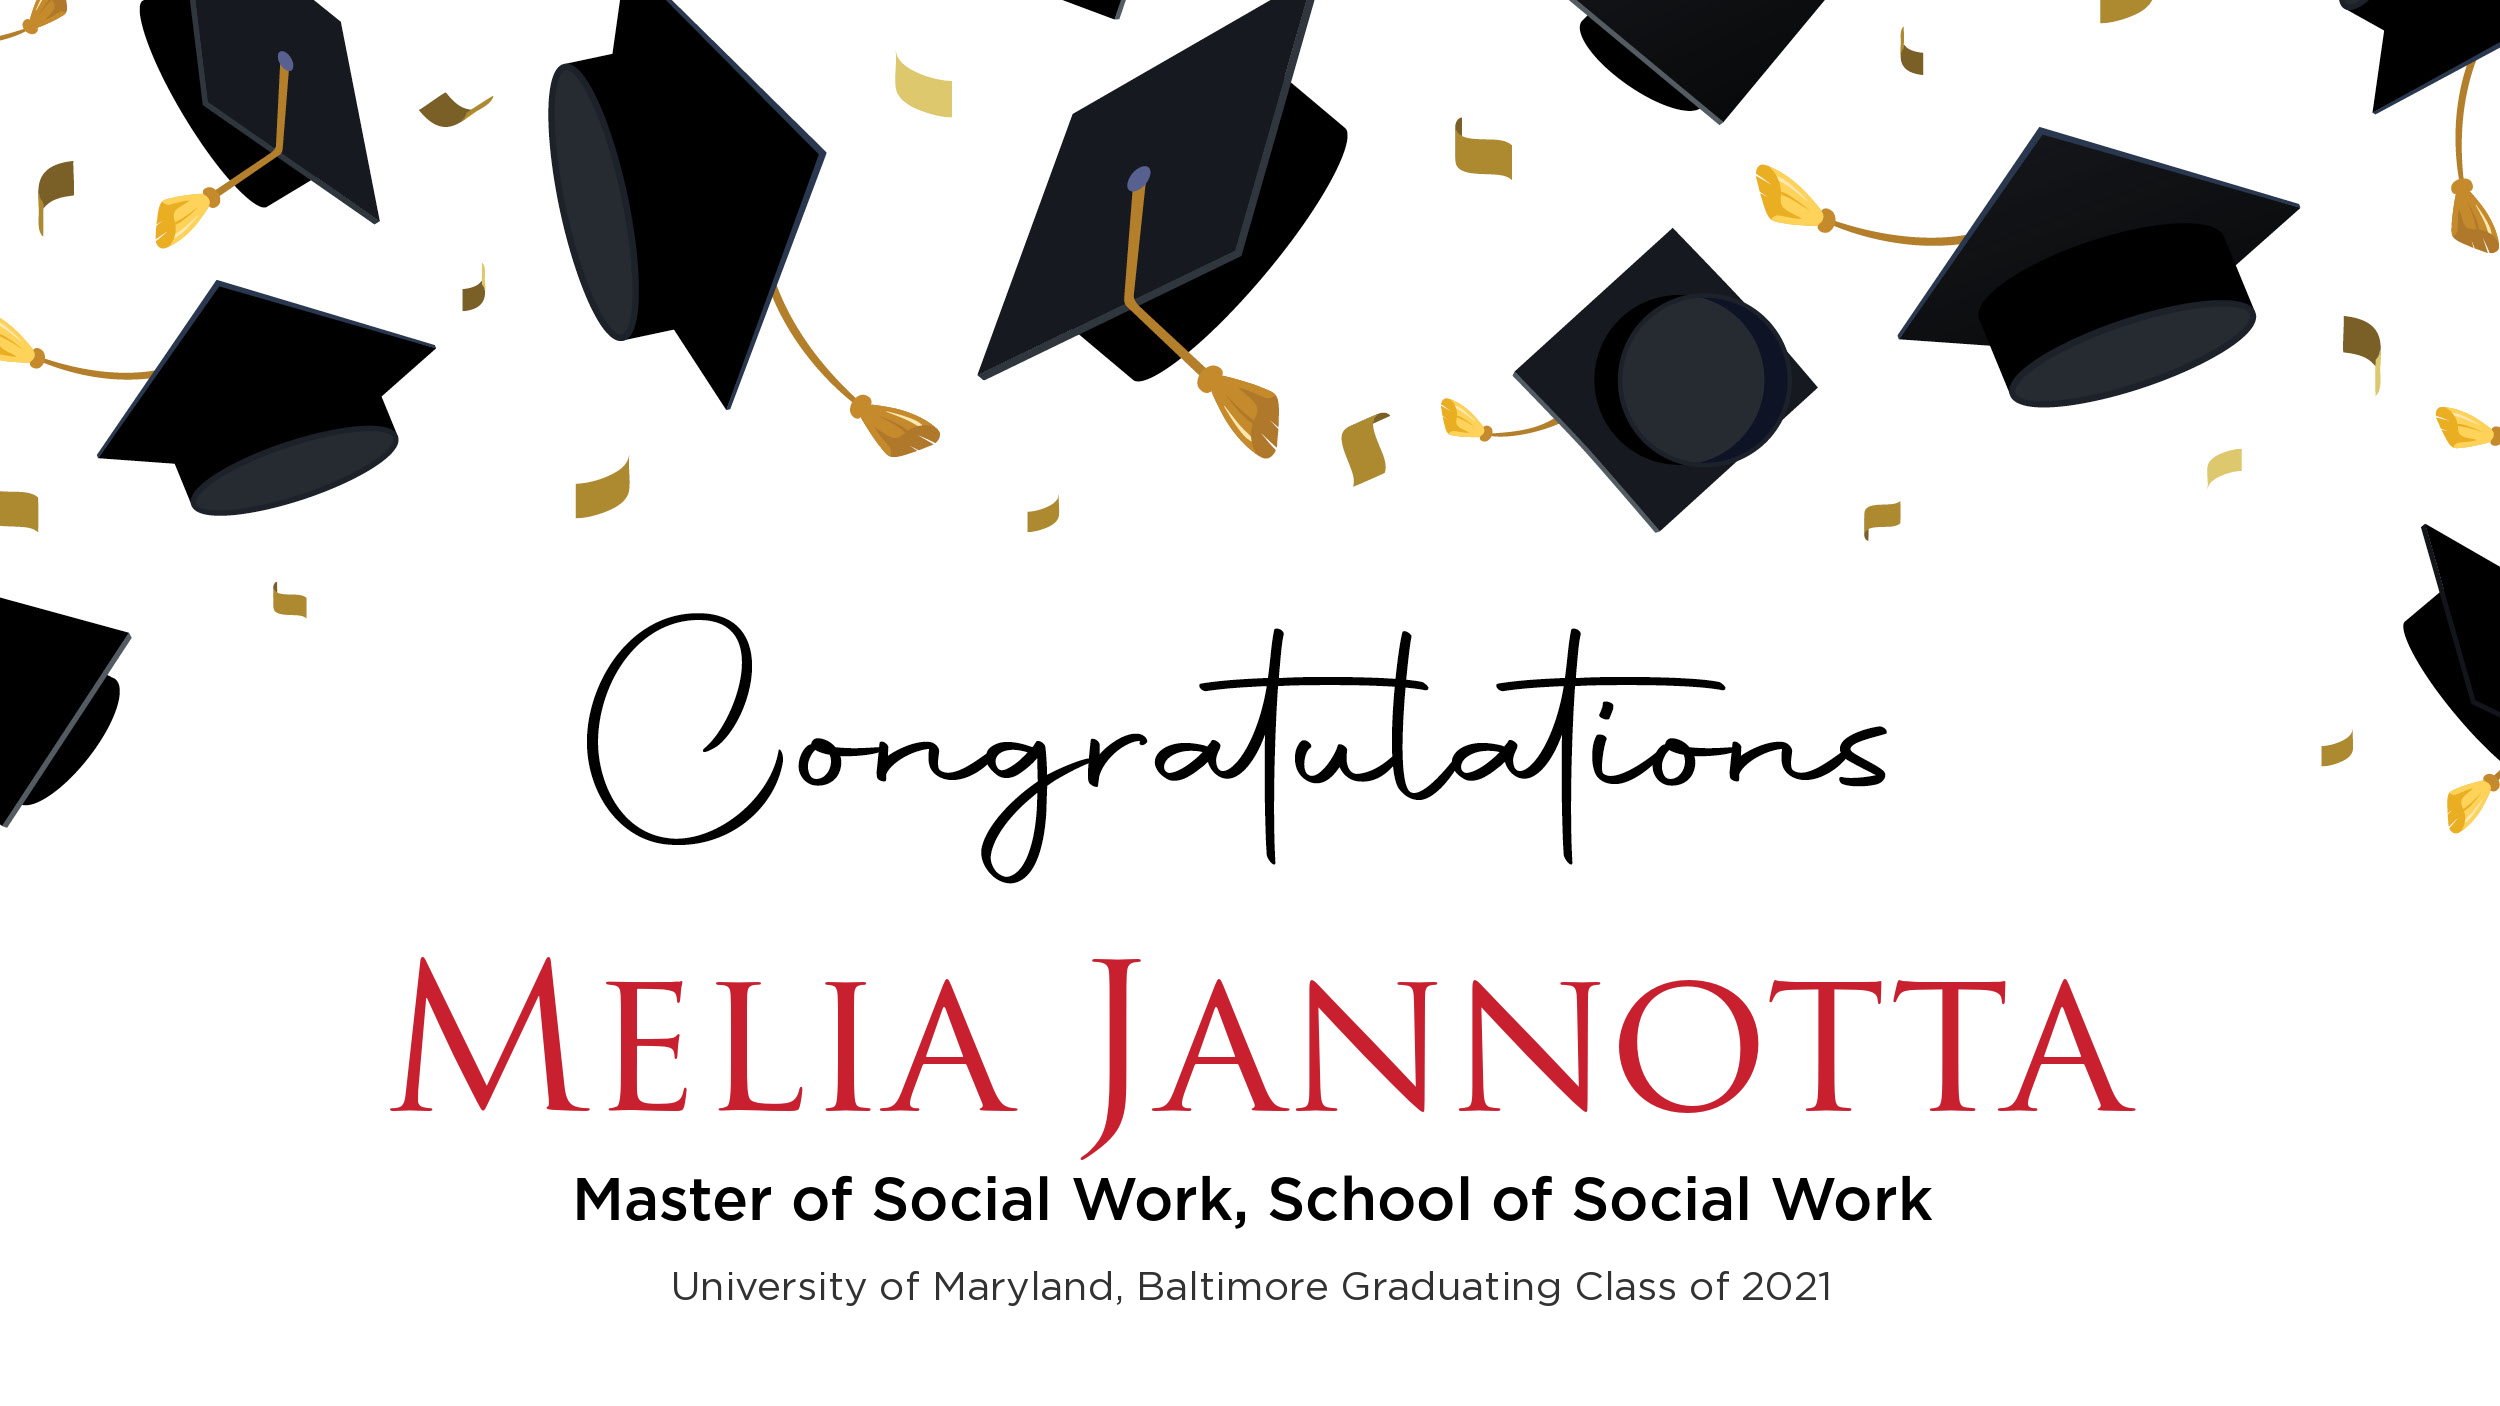 Congratulations Melia Jannotta, Master of Social Work